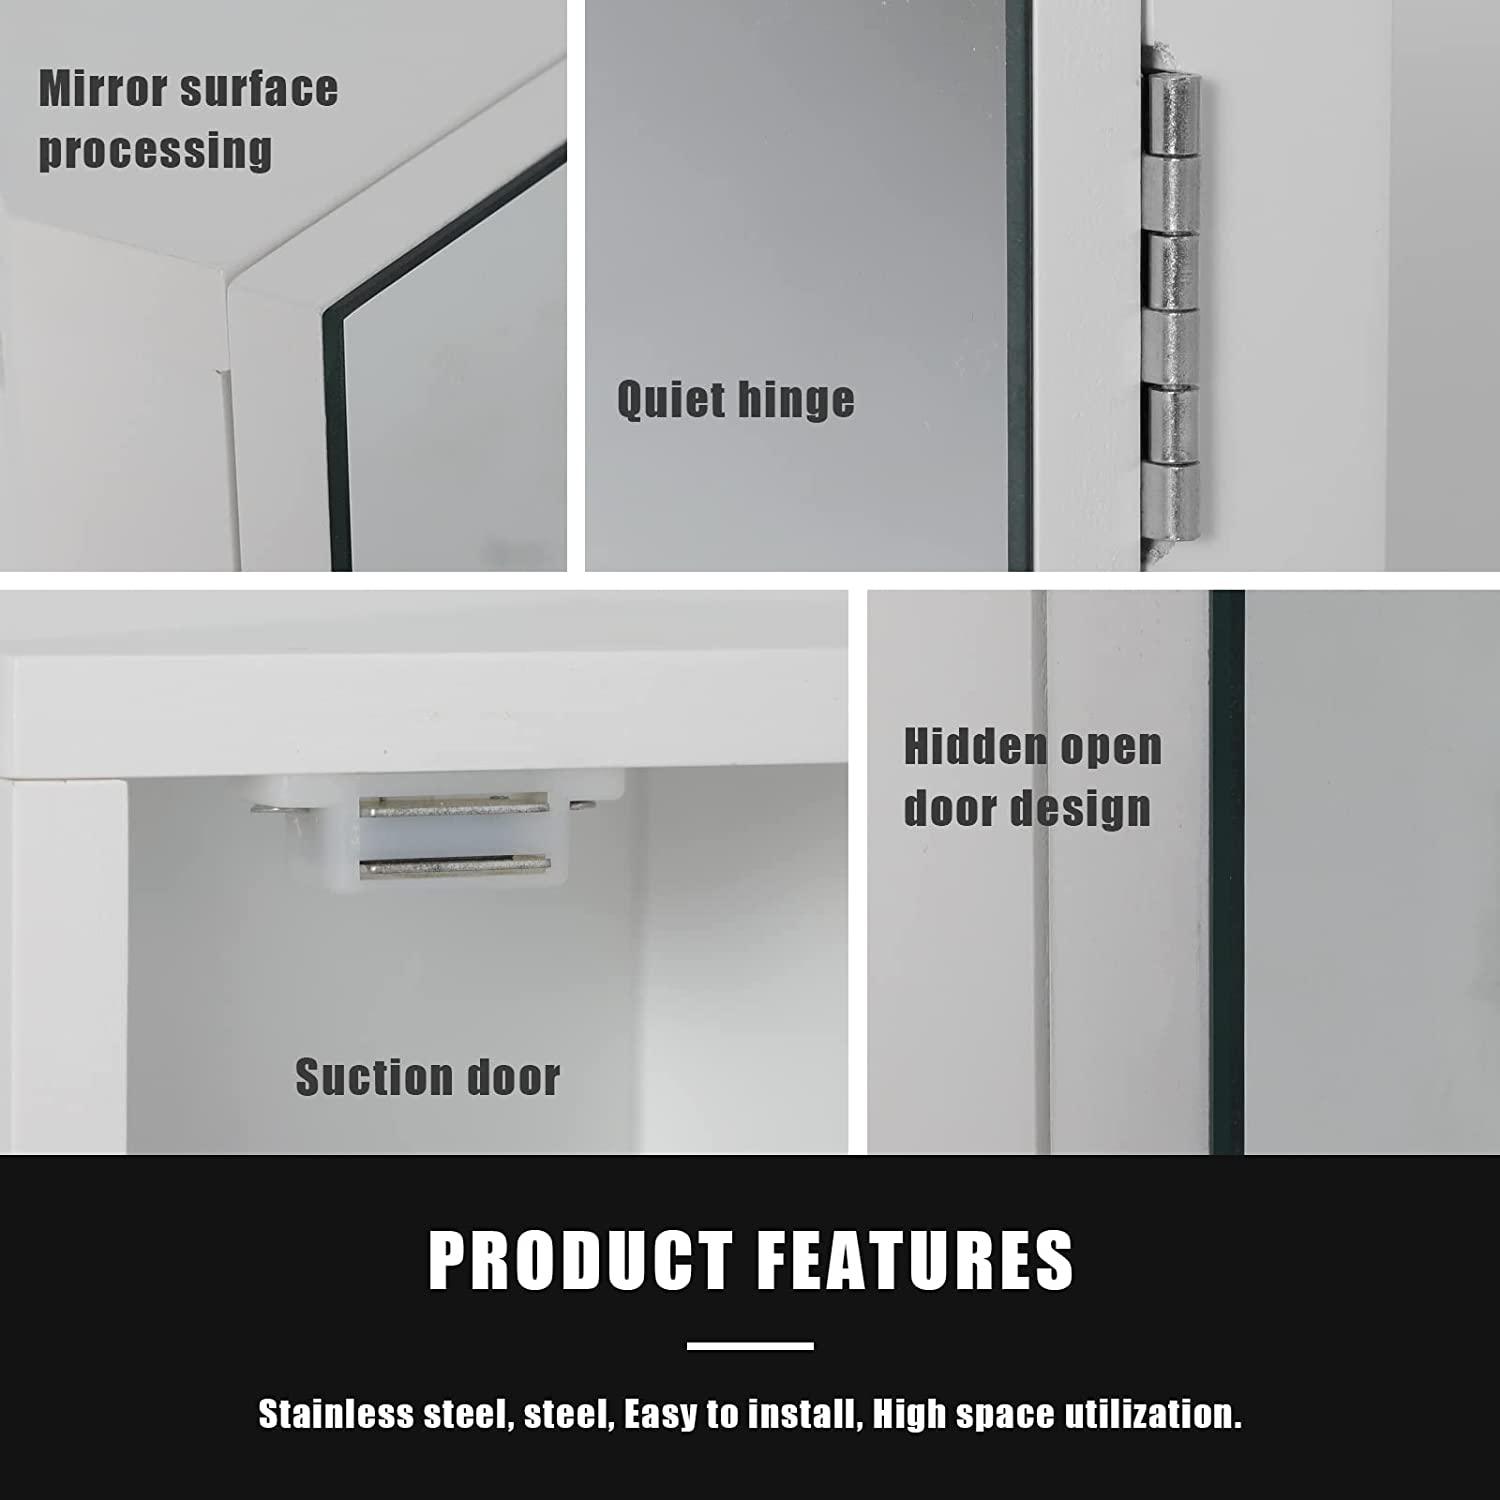 Designer Black Bathroom Shelves Corner Wall Mount